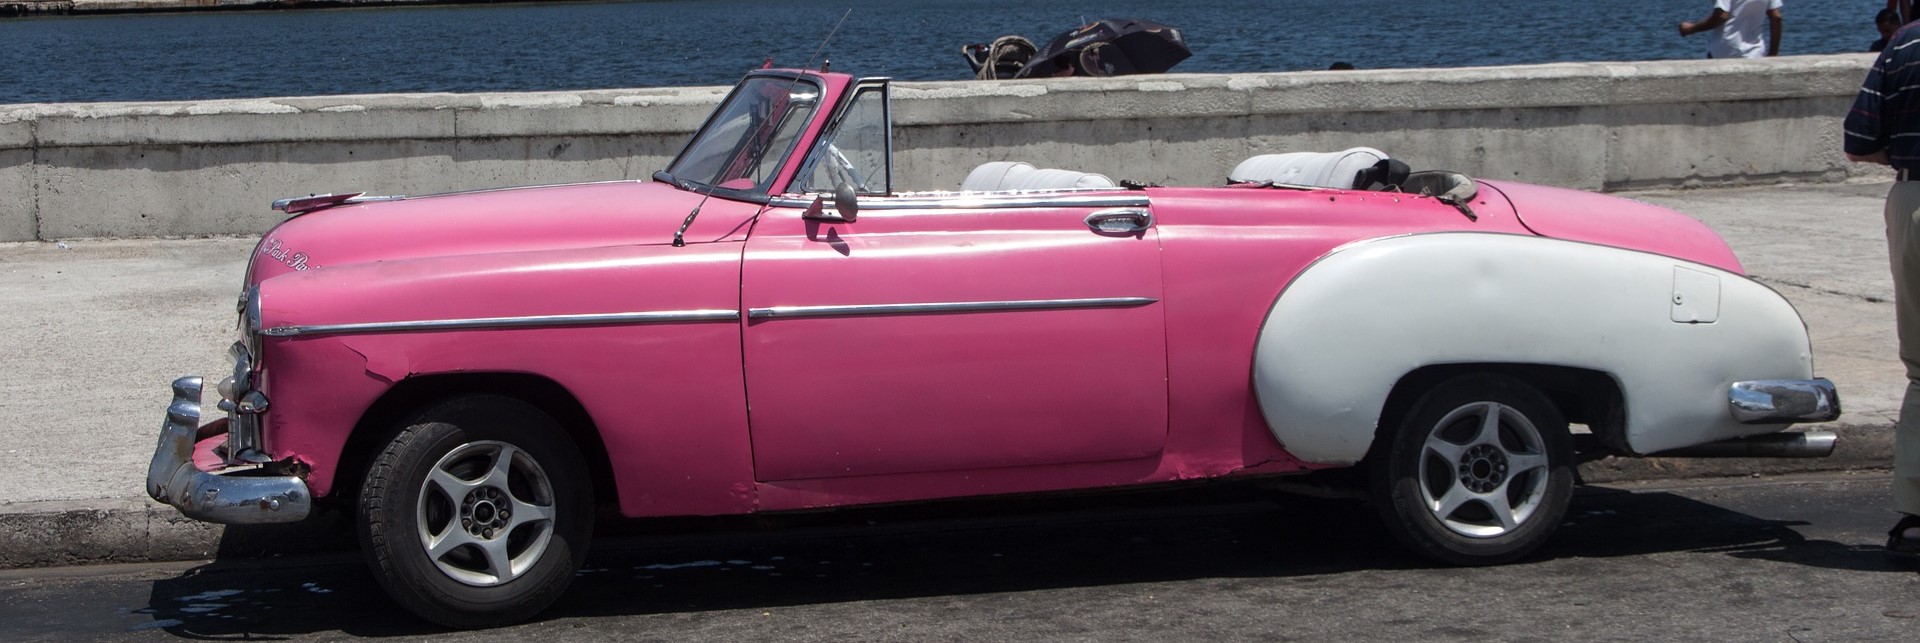 Vintage Car in San Bruno, California | Breast Cancer Car Donations